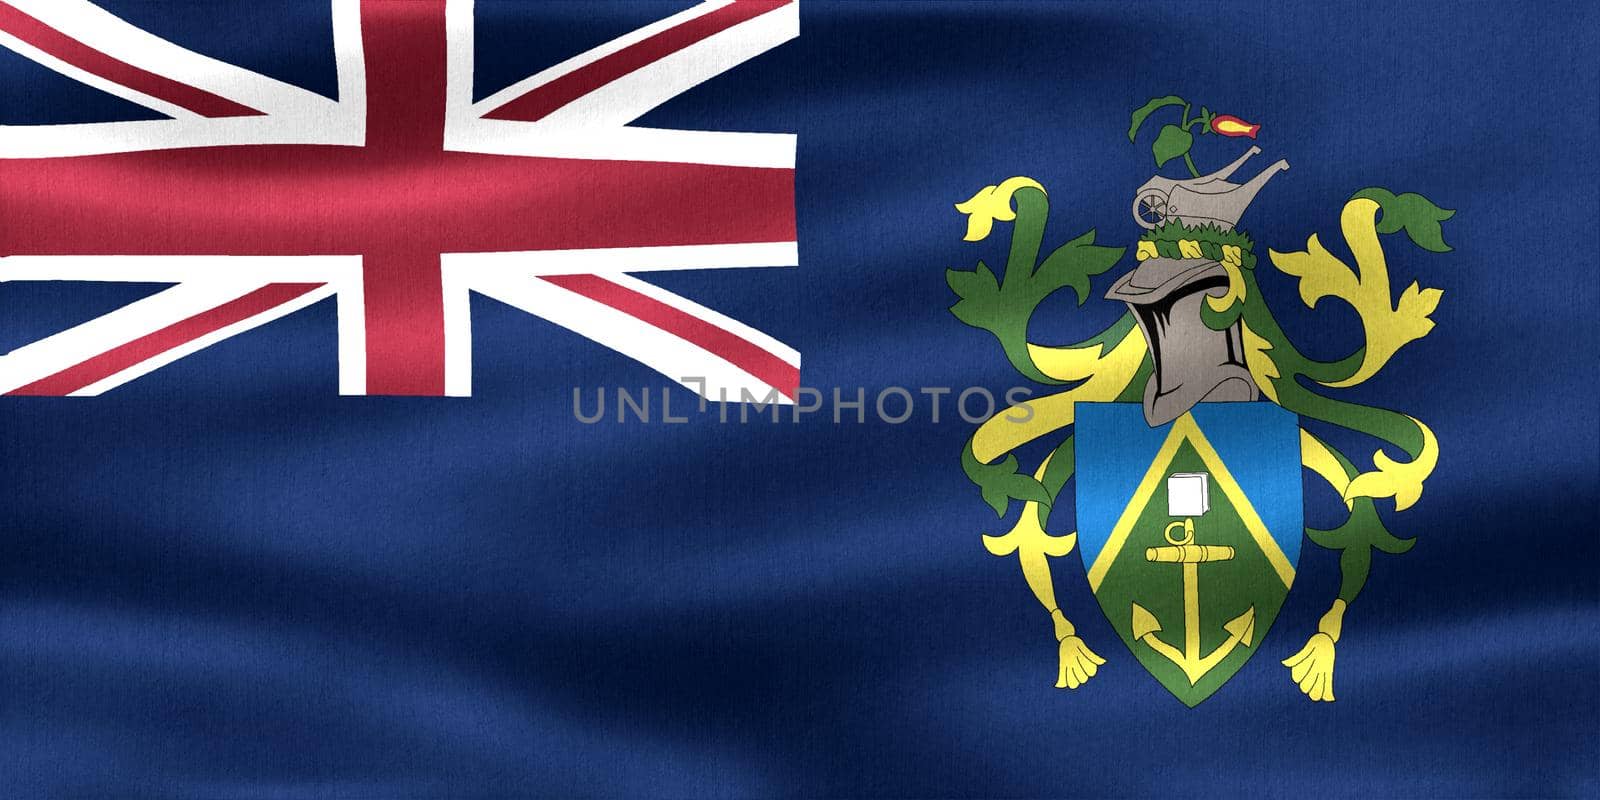 Pitcairn Islands flag - realistic waving fabric flag